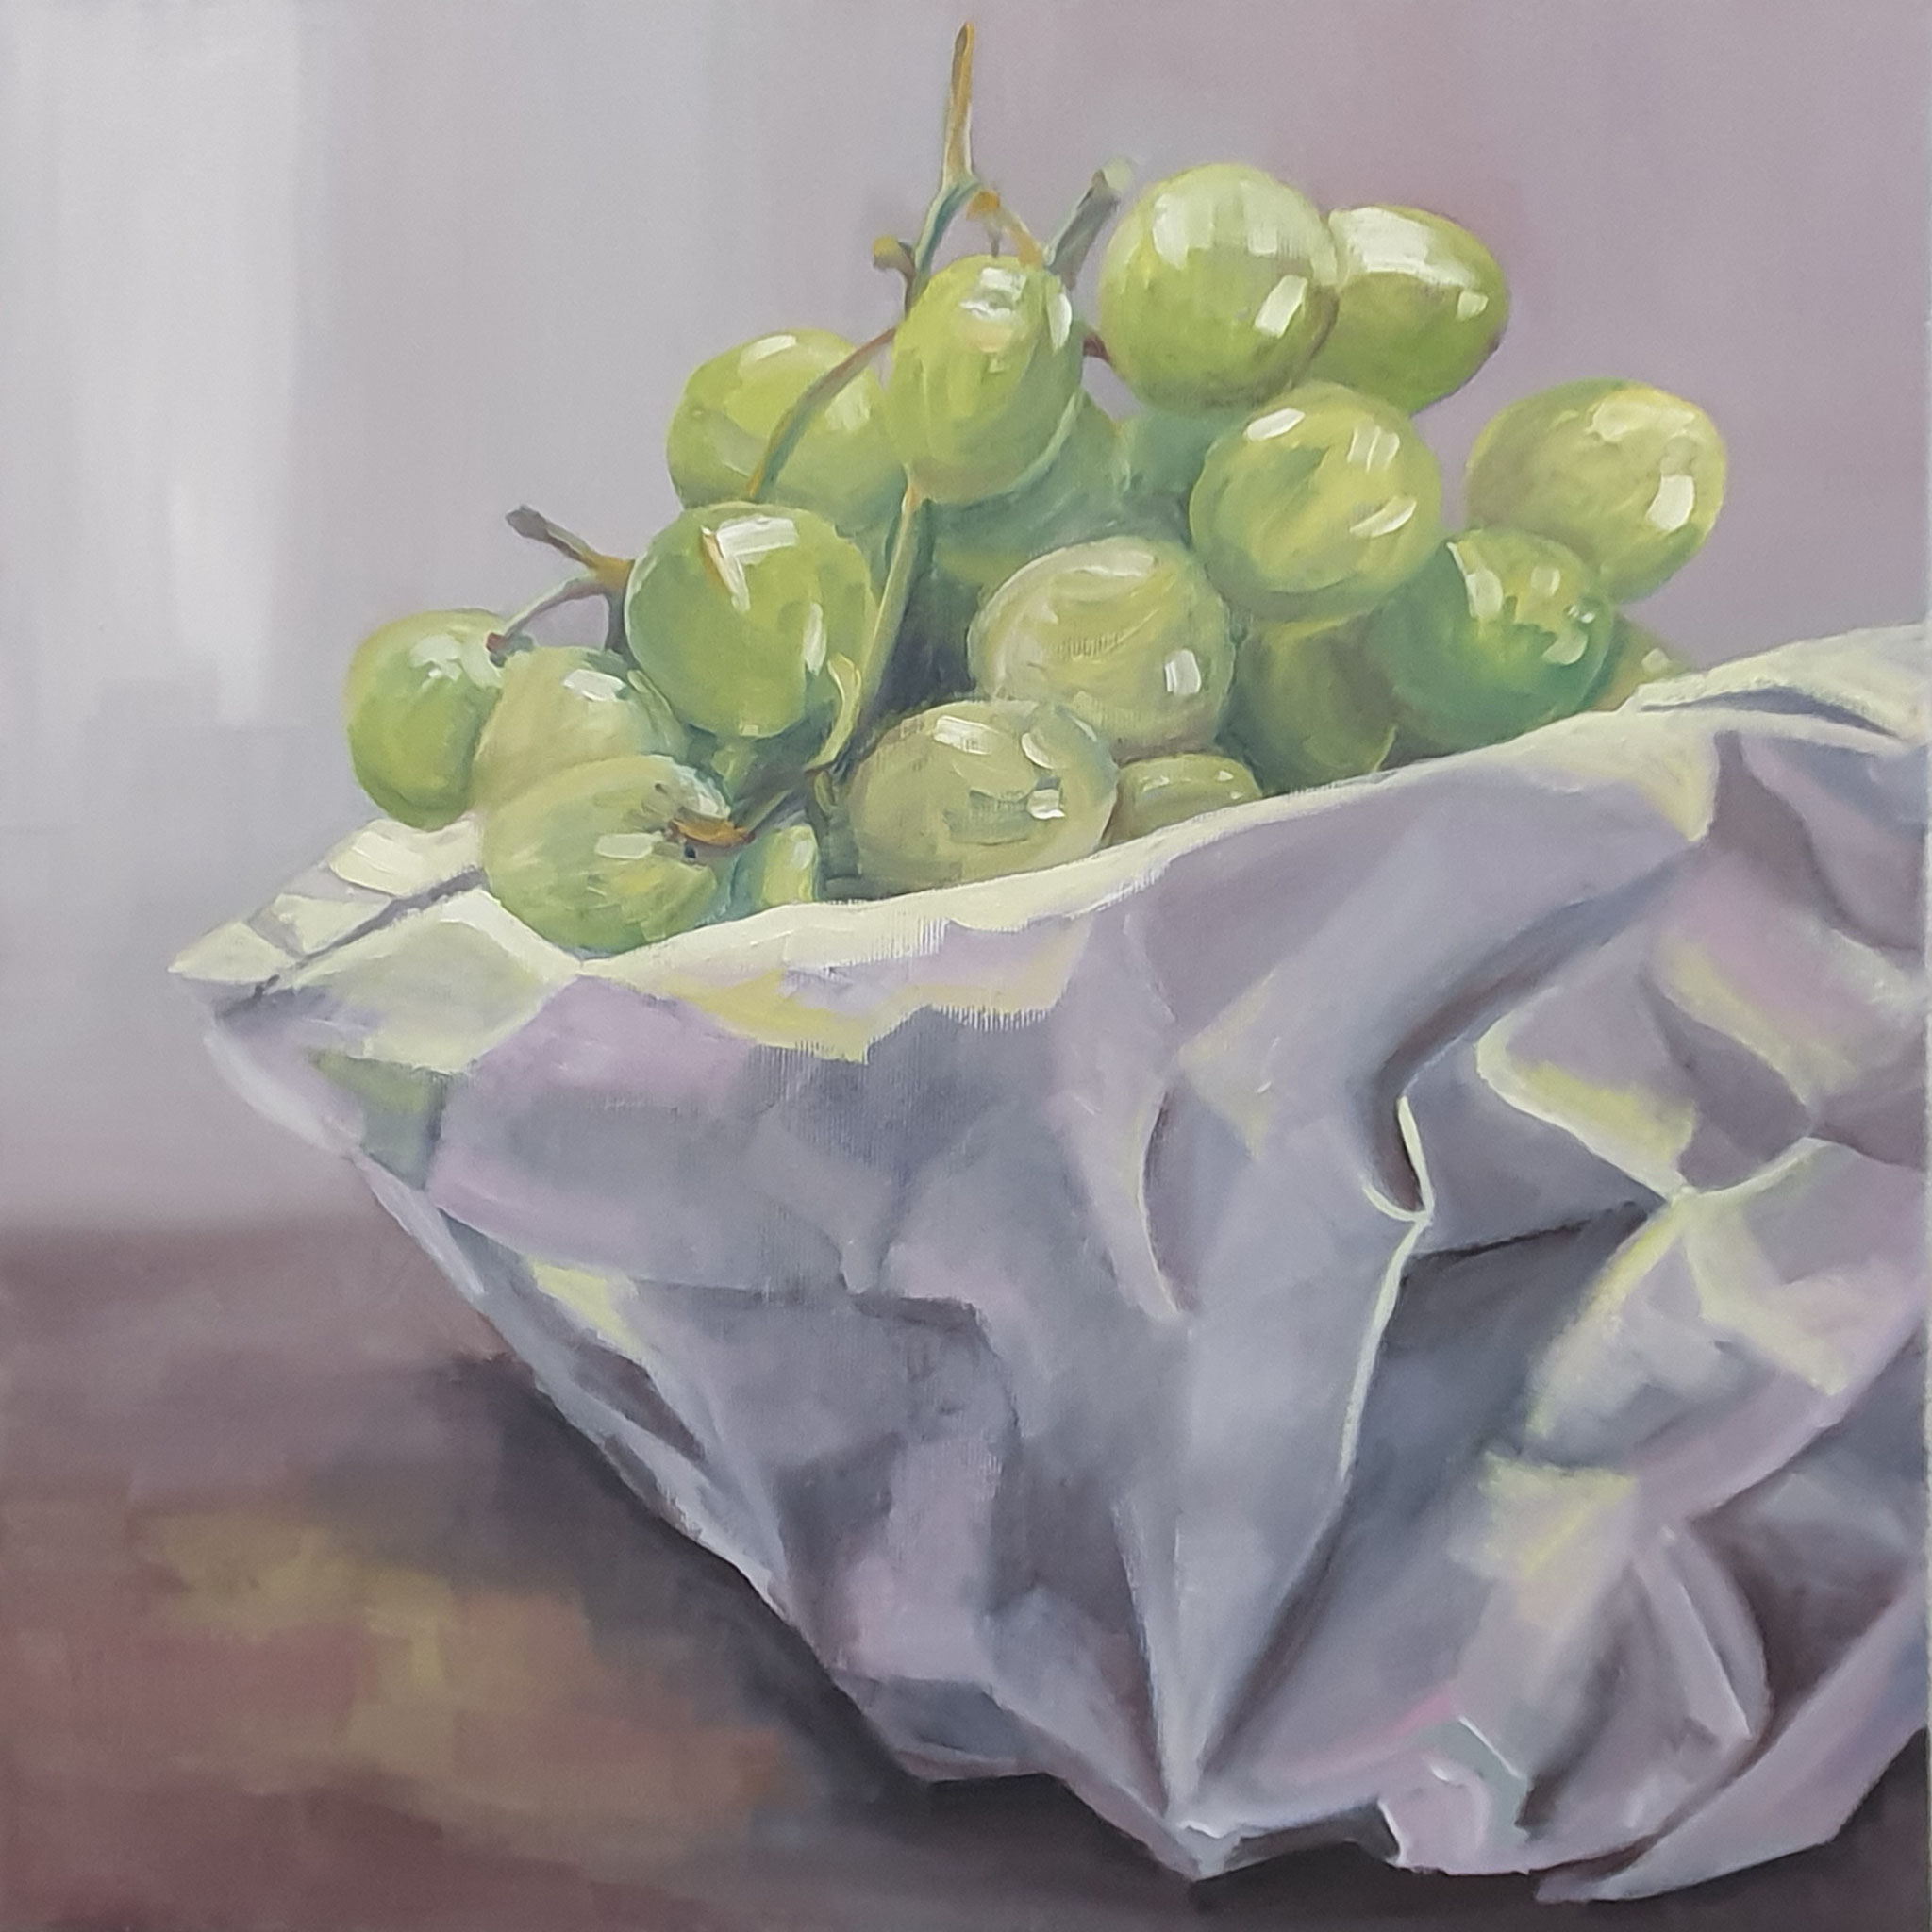 Grapes, Öl auf Leinwand, 50cm x 50cm